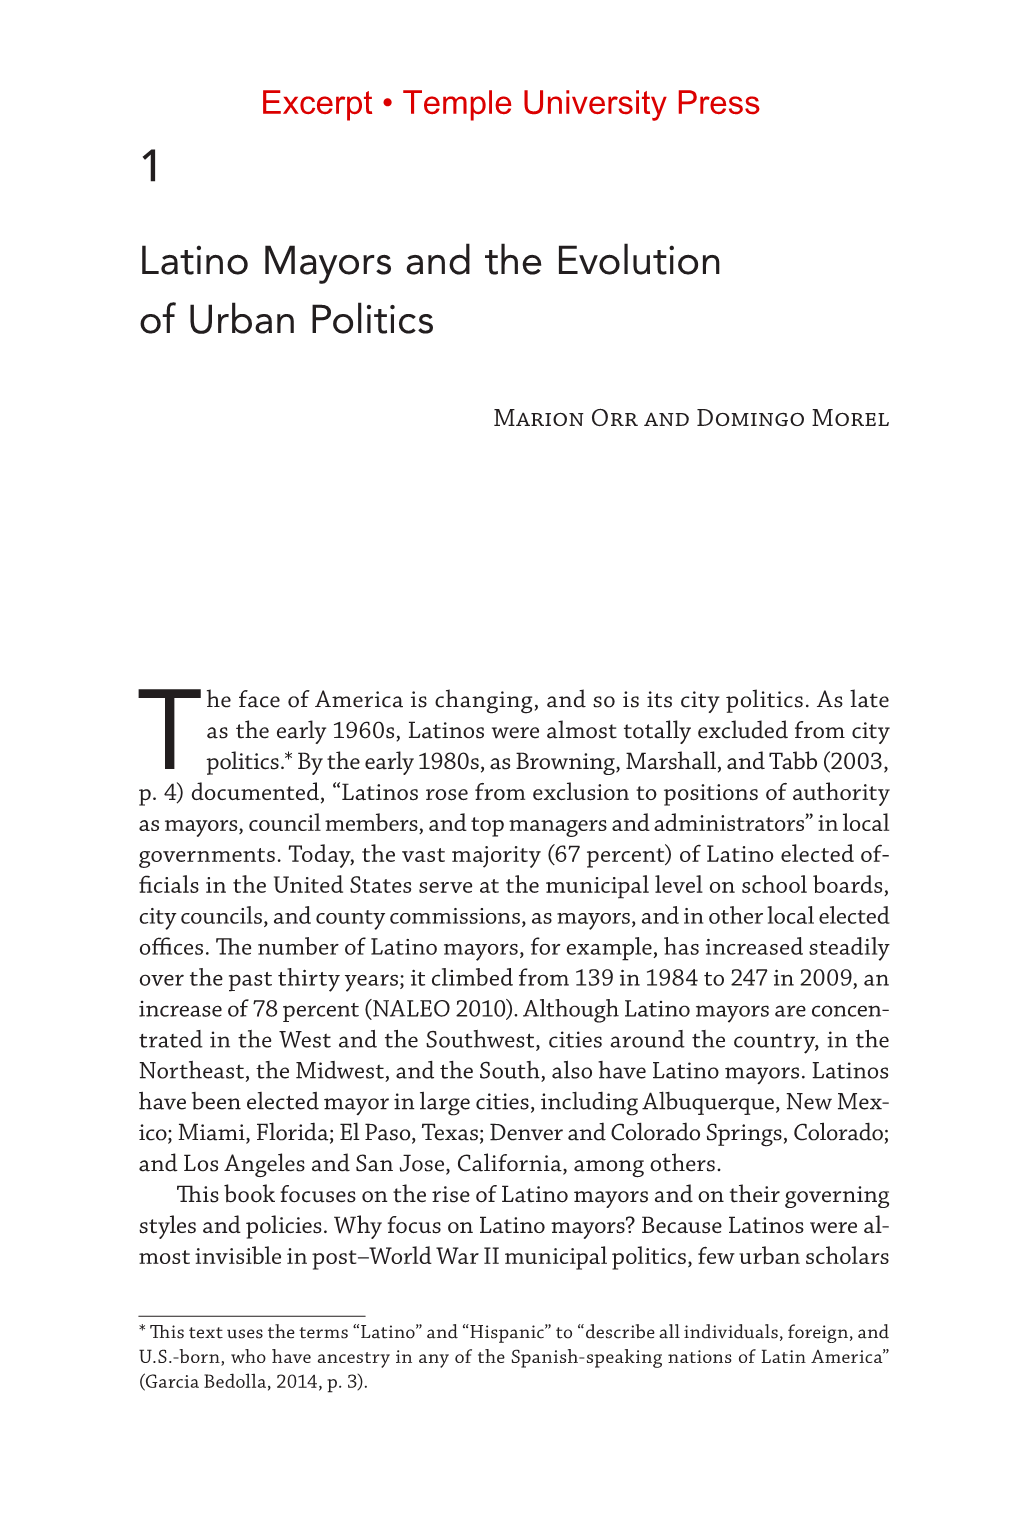 Latino Mayors and the Evolution of Urban Politics